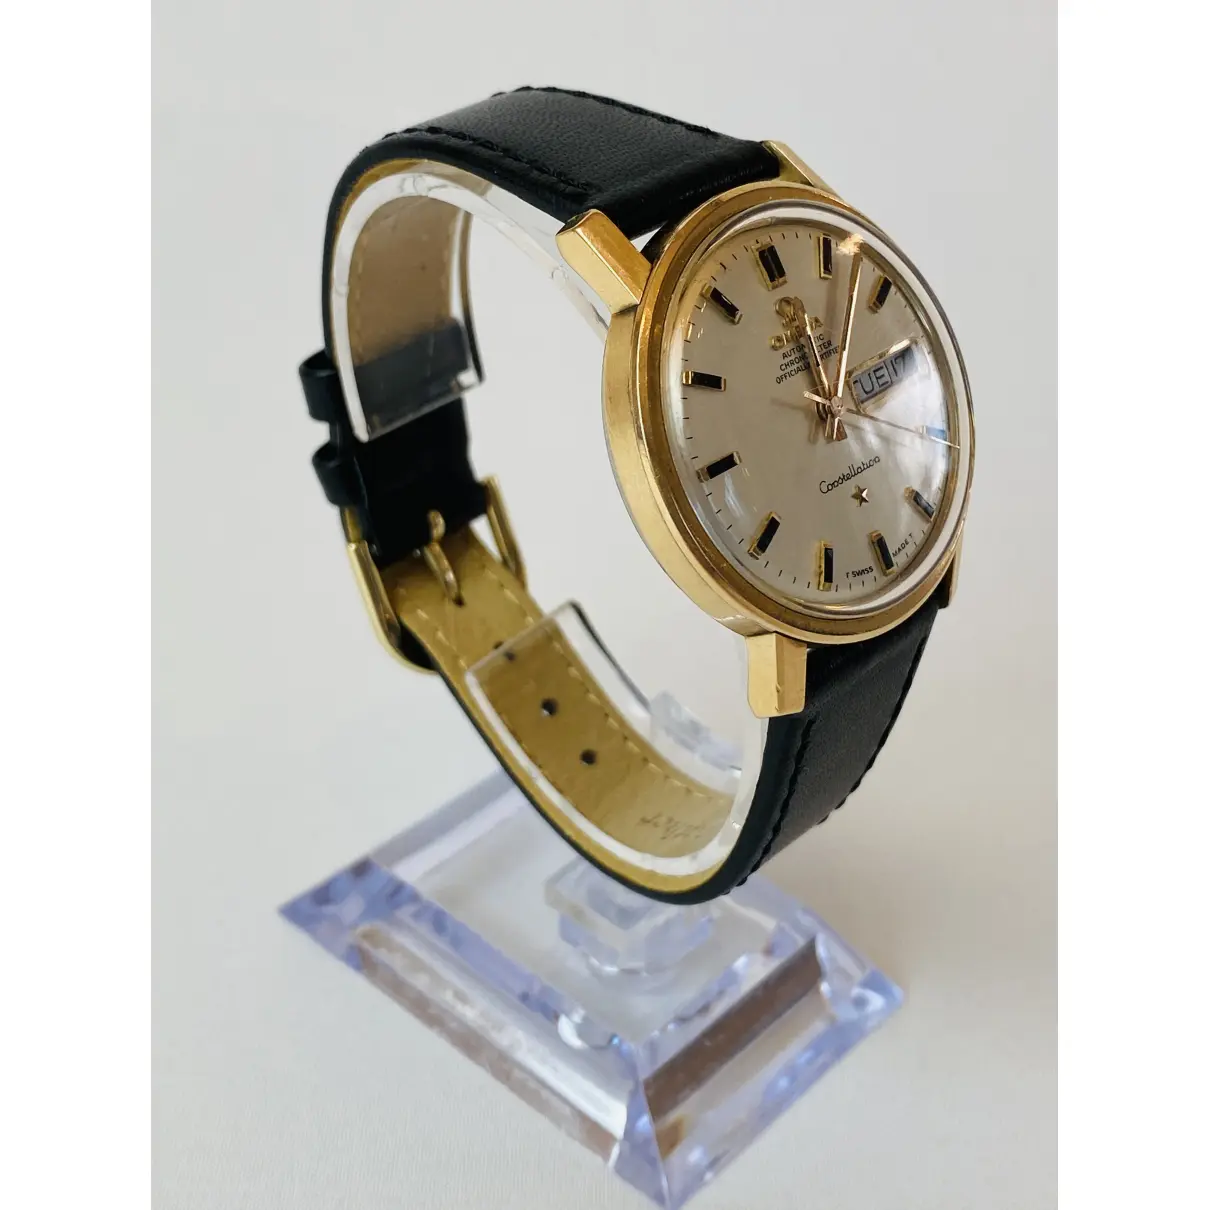 Buy Omega Constellation watch online - Vintage